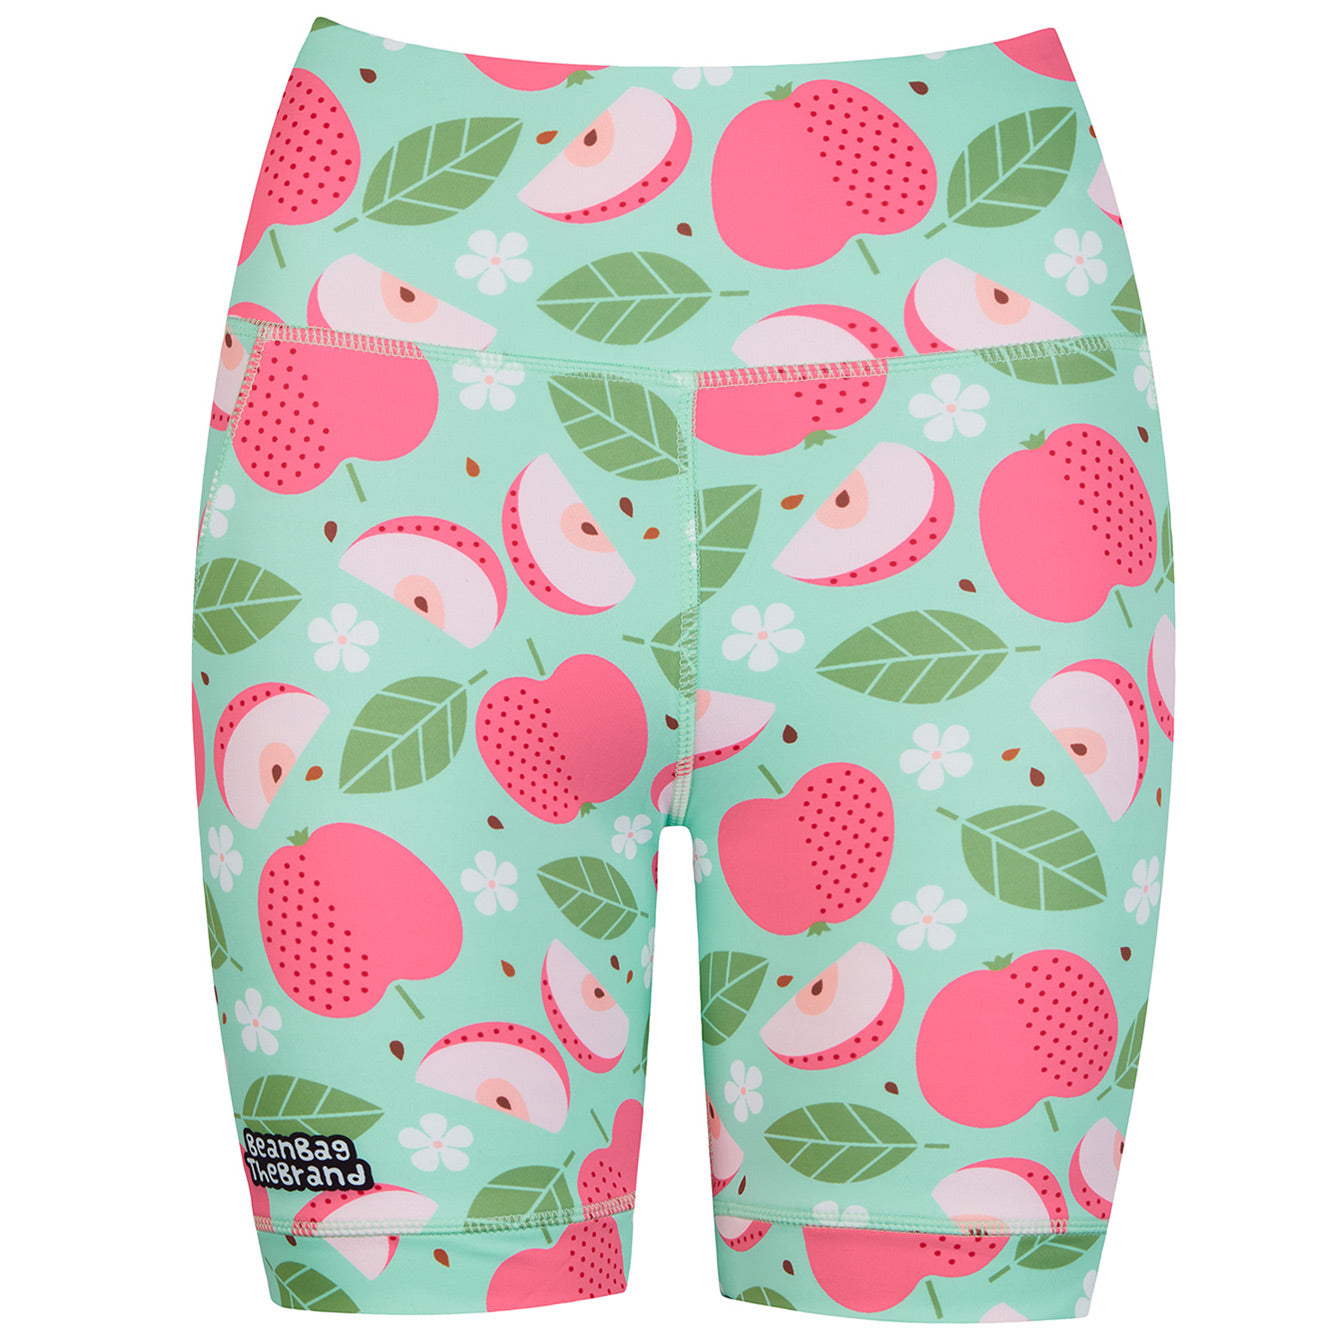 Perfect shorts for my apple shape babes! #oldnavy #appleshapebody #plu